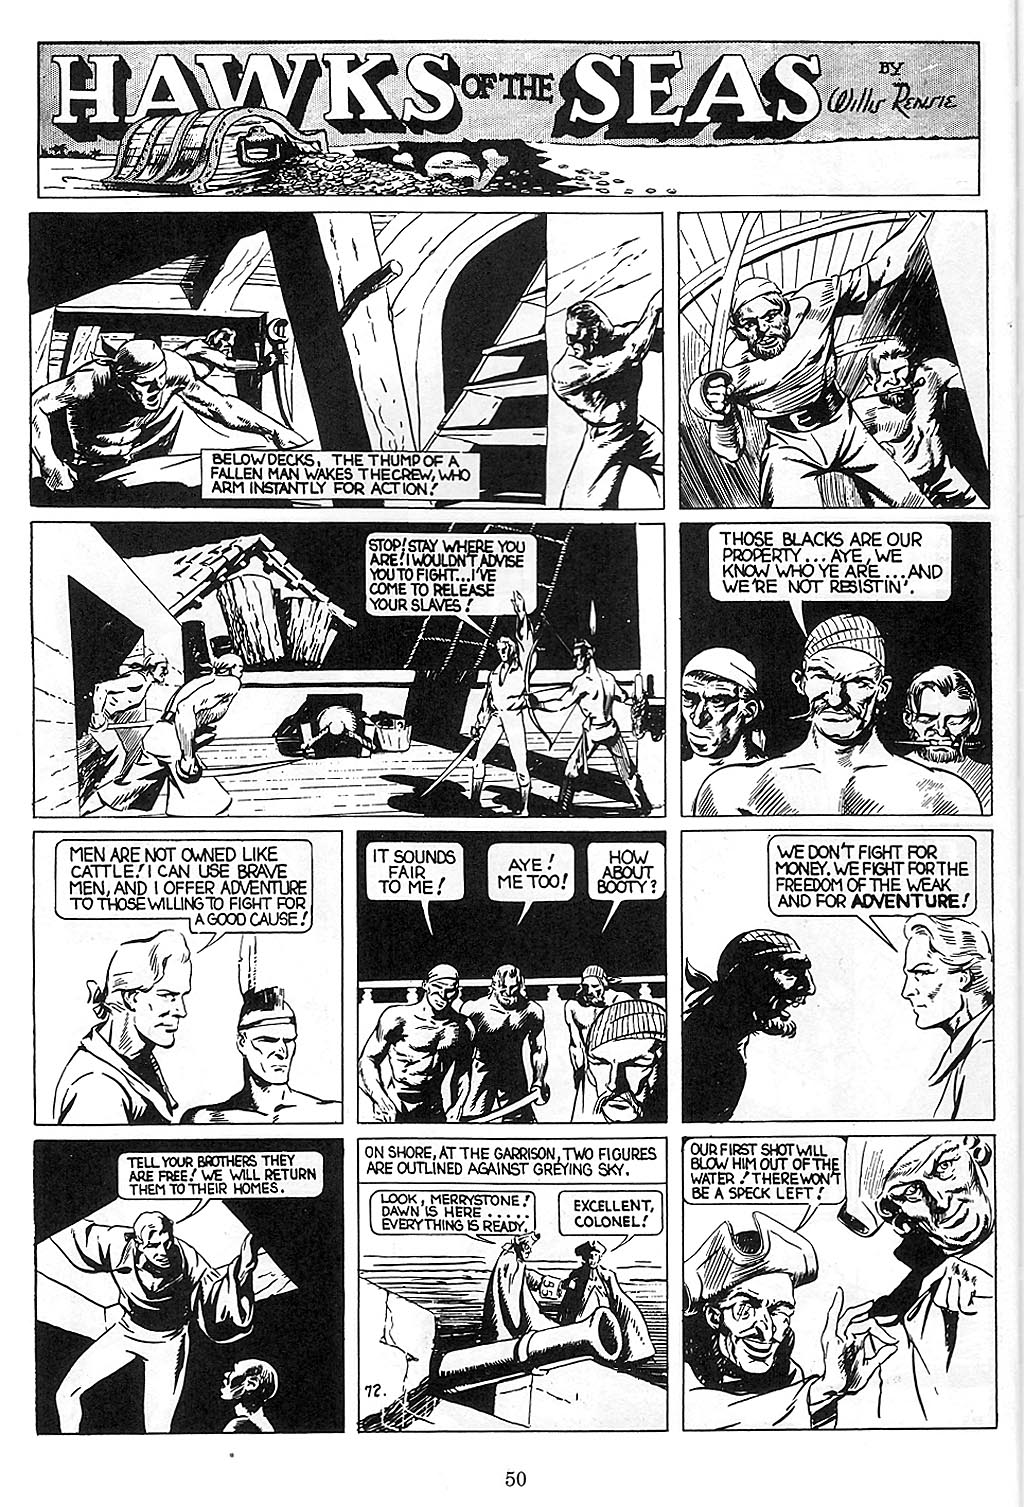 Read online Will Eisner's Hawks of the Seas comic -  Issue # TPB - 51